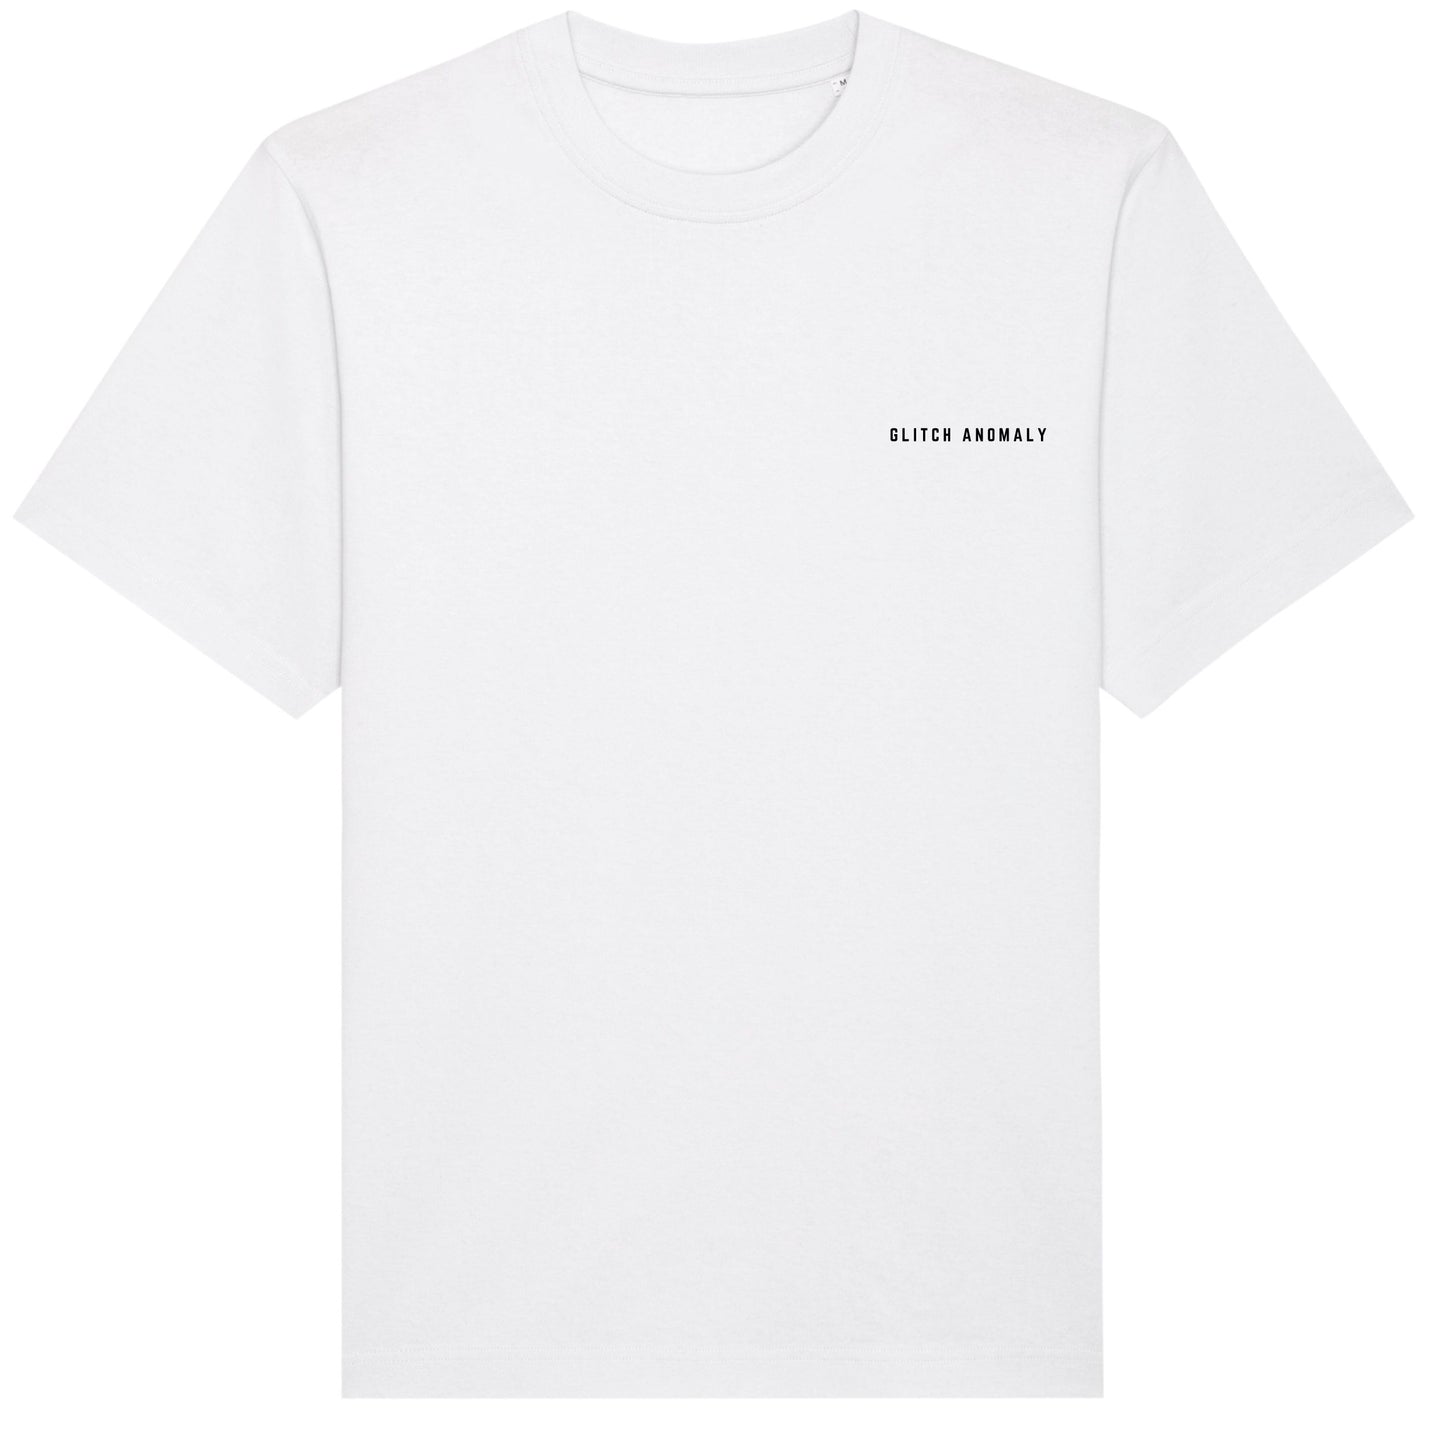 Bio-Degradable T-Shirt Reversed Print (Black Background)